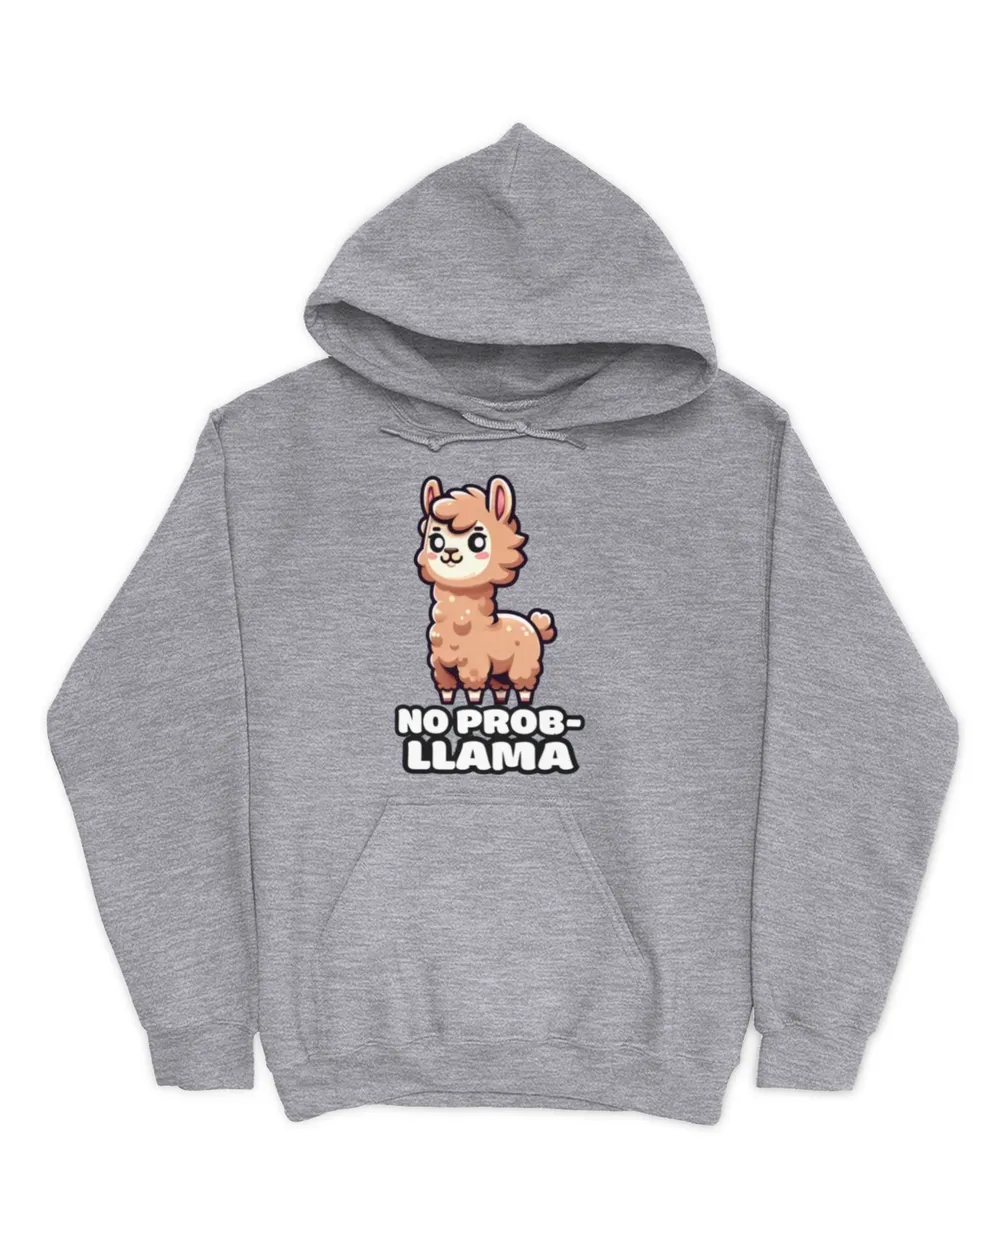 No Prob-llama - Llama T-shirt